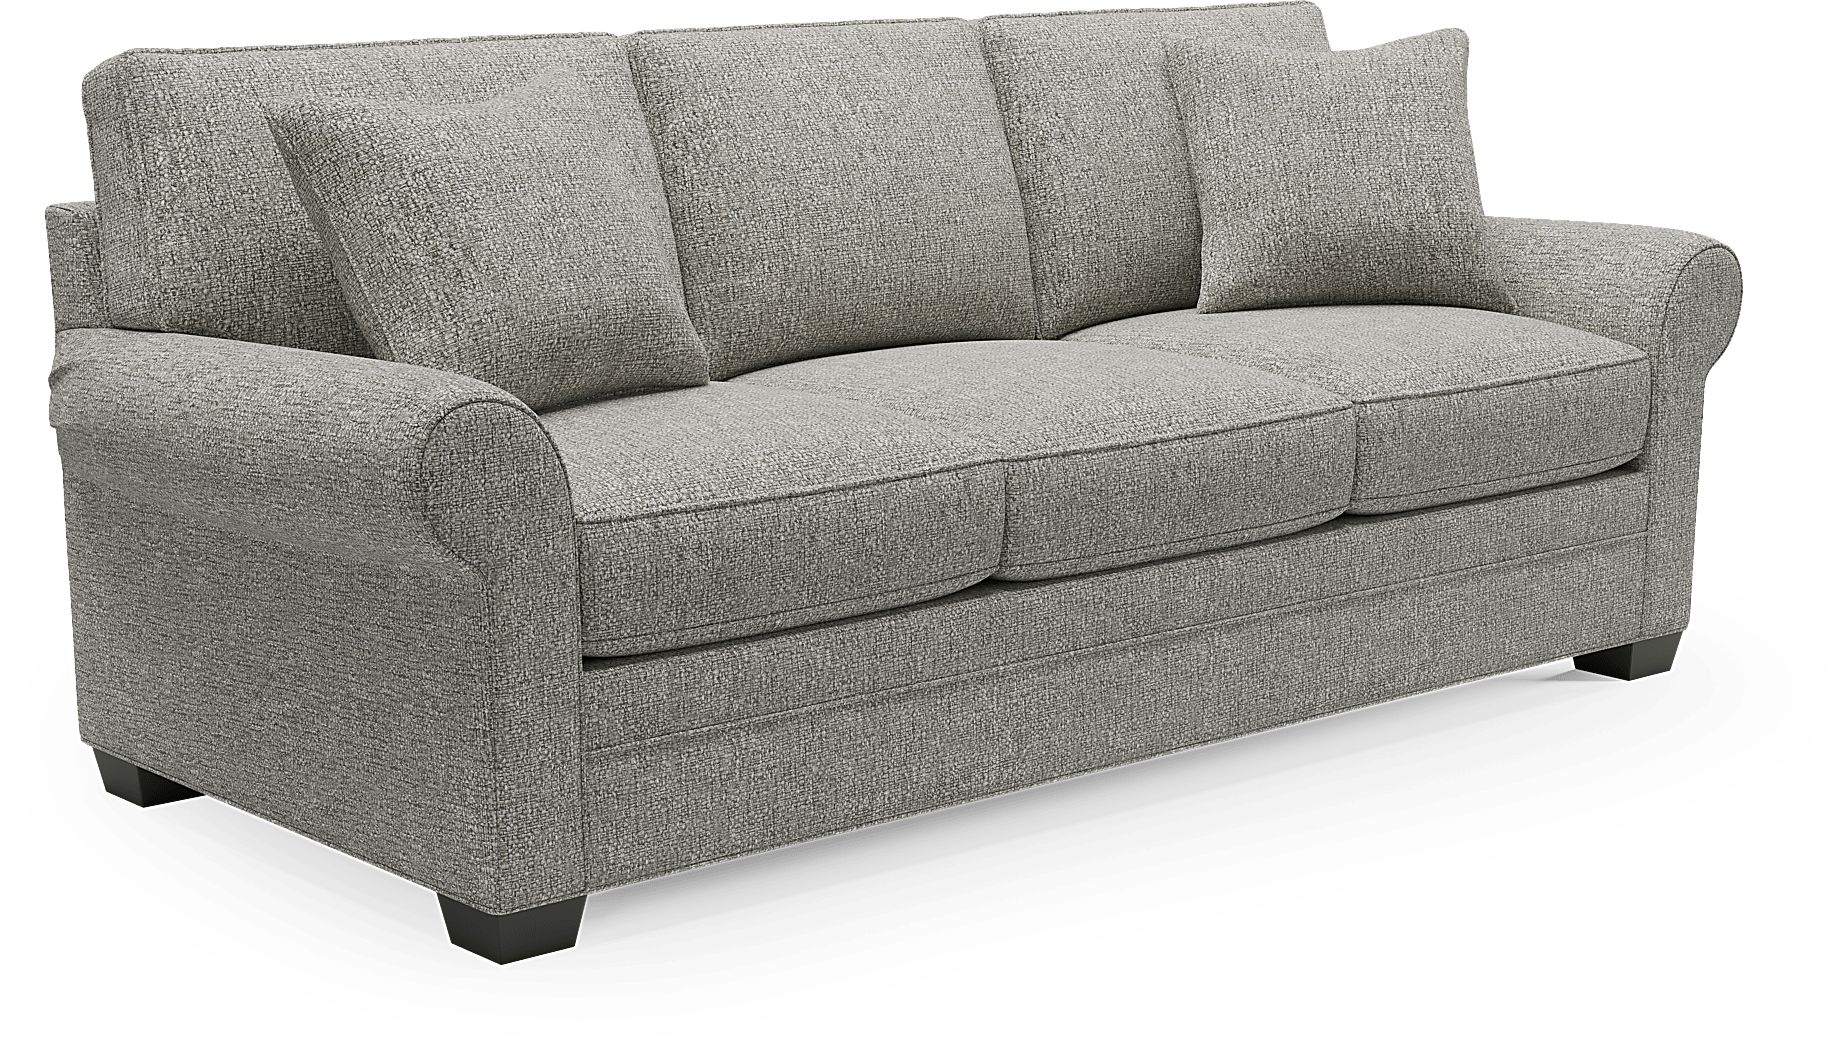 Cindy Crawford Home Bellingham Gray Textured Sofa